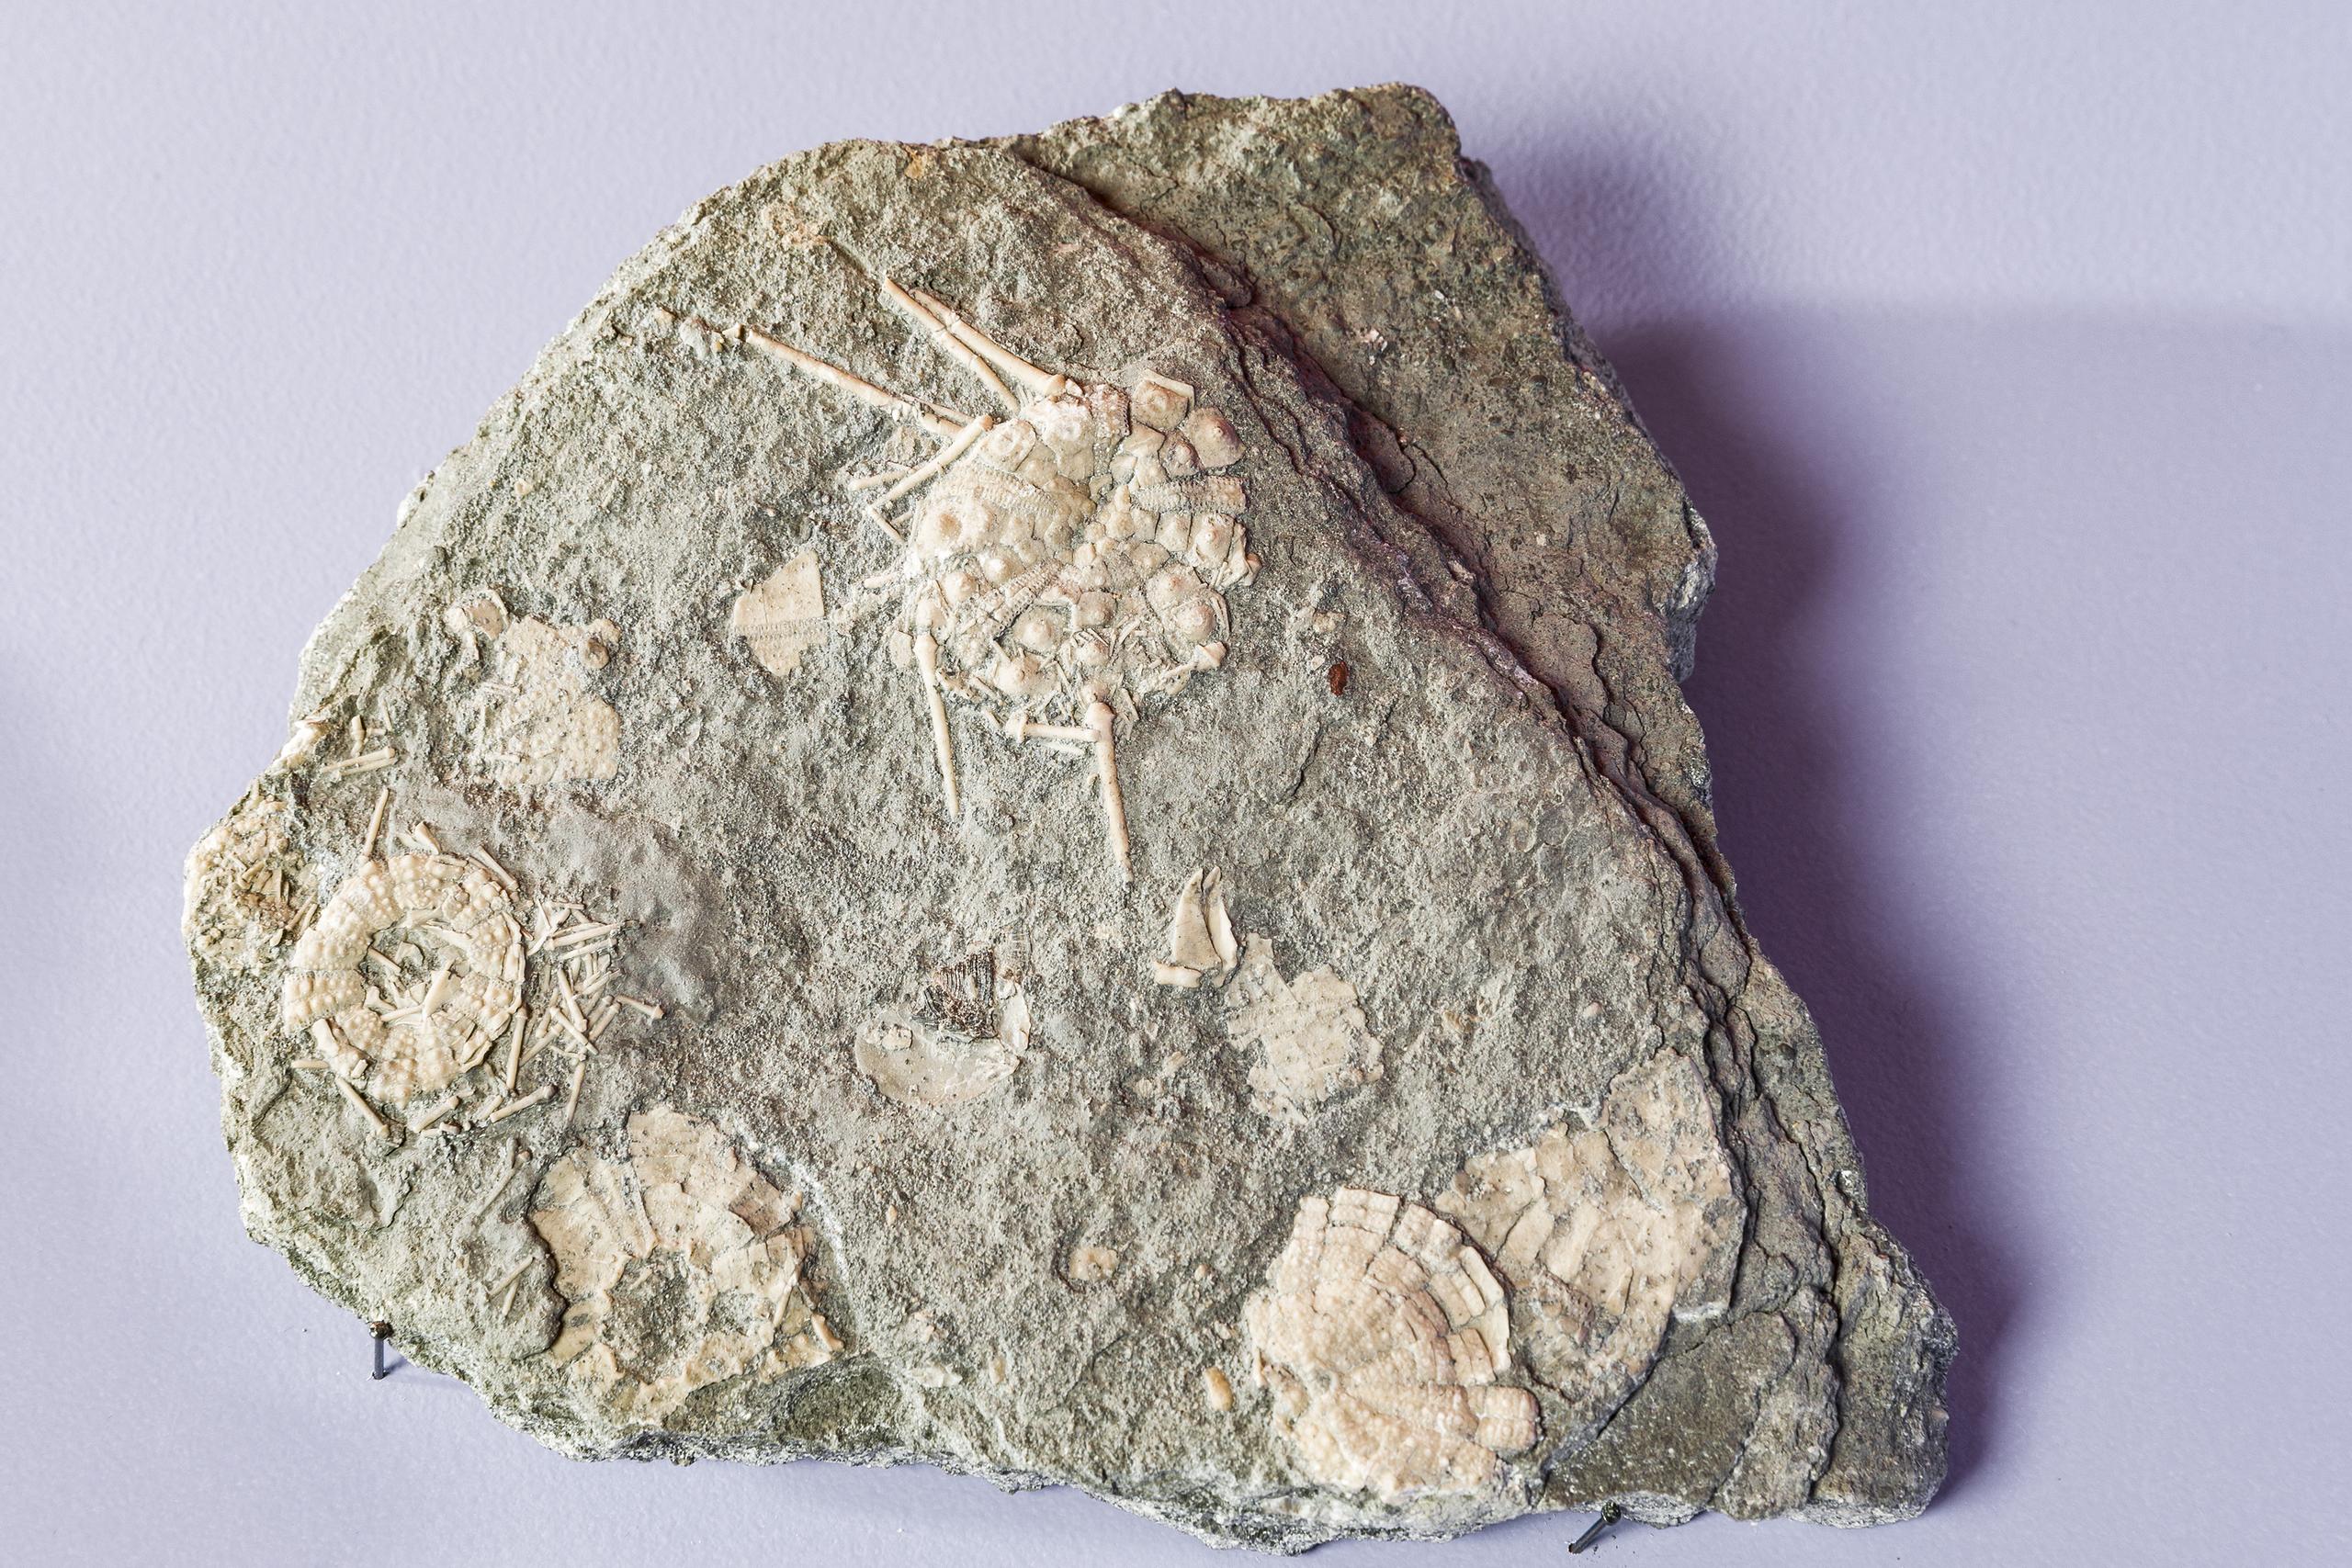 Ausstellung 5 Sterne Neufunde 2020 Fossilien Seegigel Paläontologie NMBE